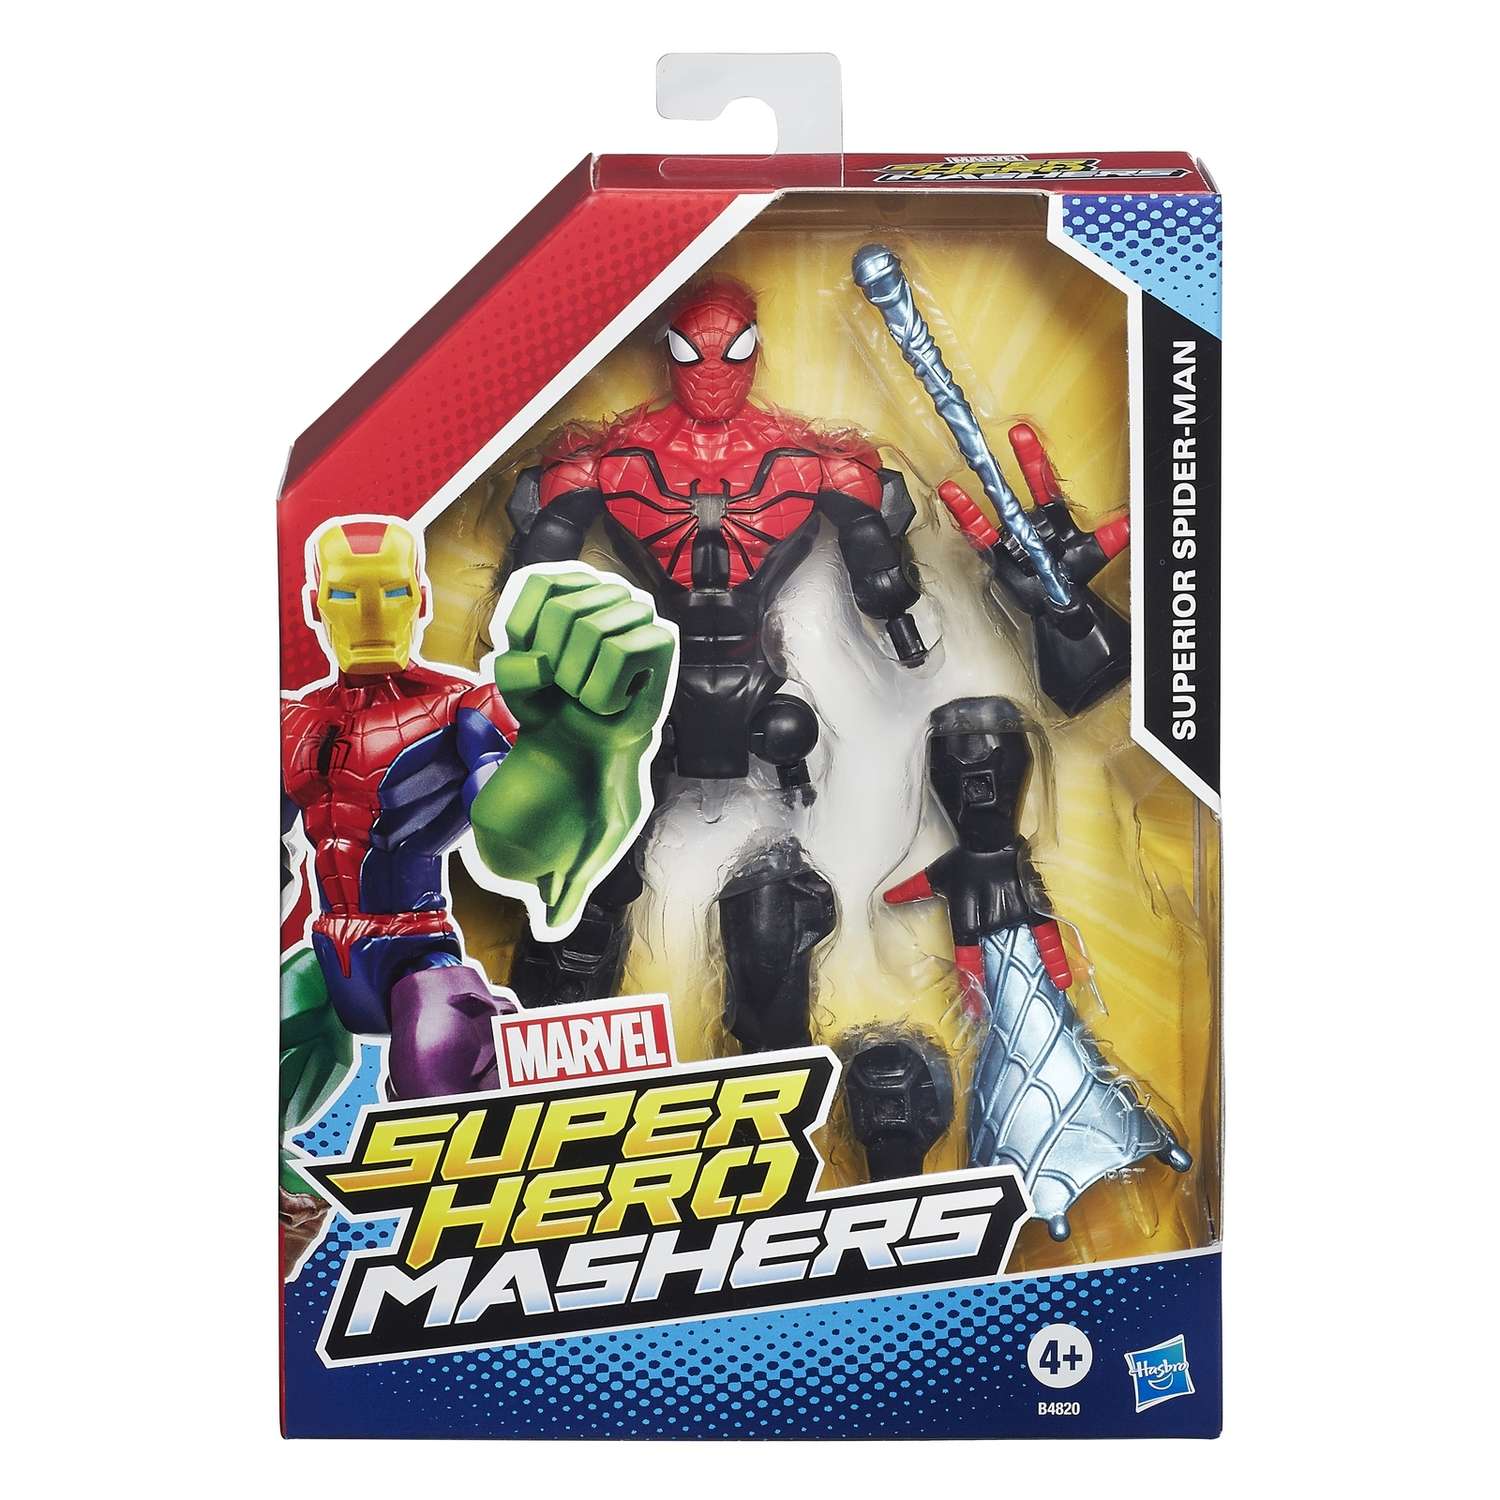 Разборные фигурки HEROMASHERS Super Hero Mashers в ассортименте - фото 73